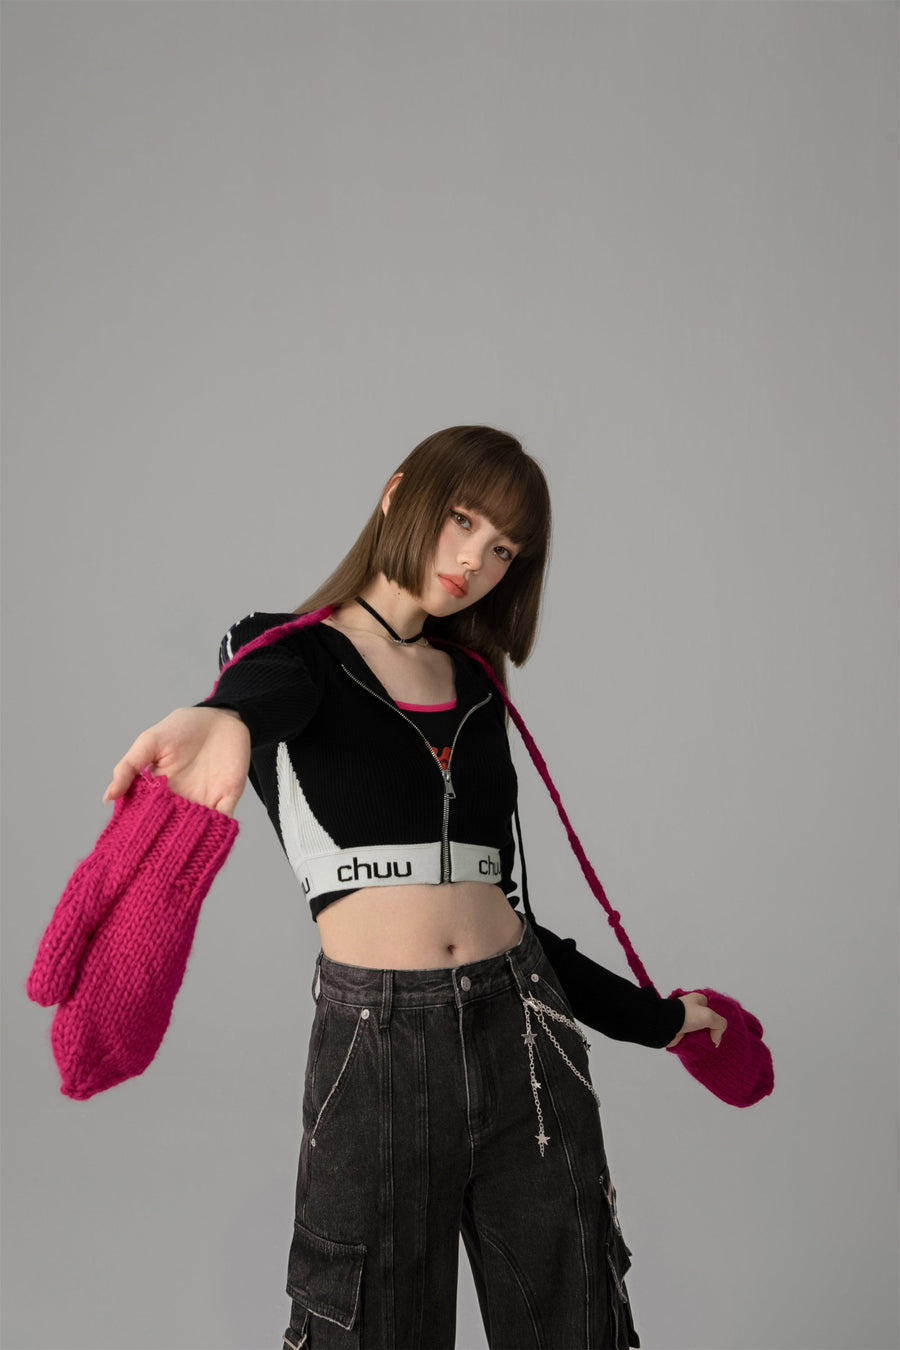 CHUU Knit Hooded Crop Zip-Up Cardigan